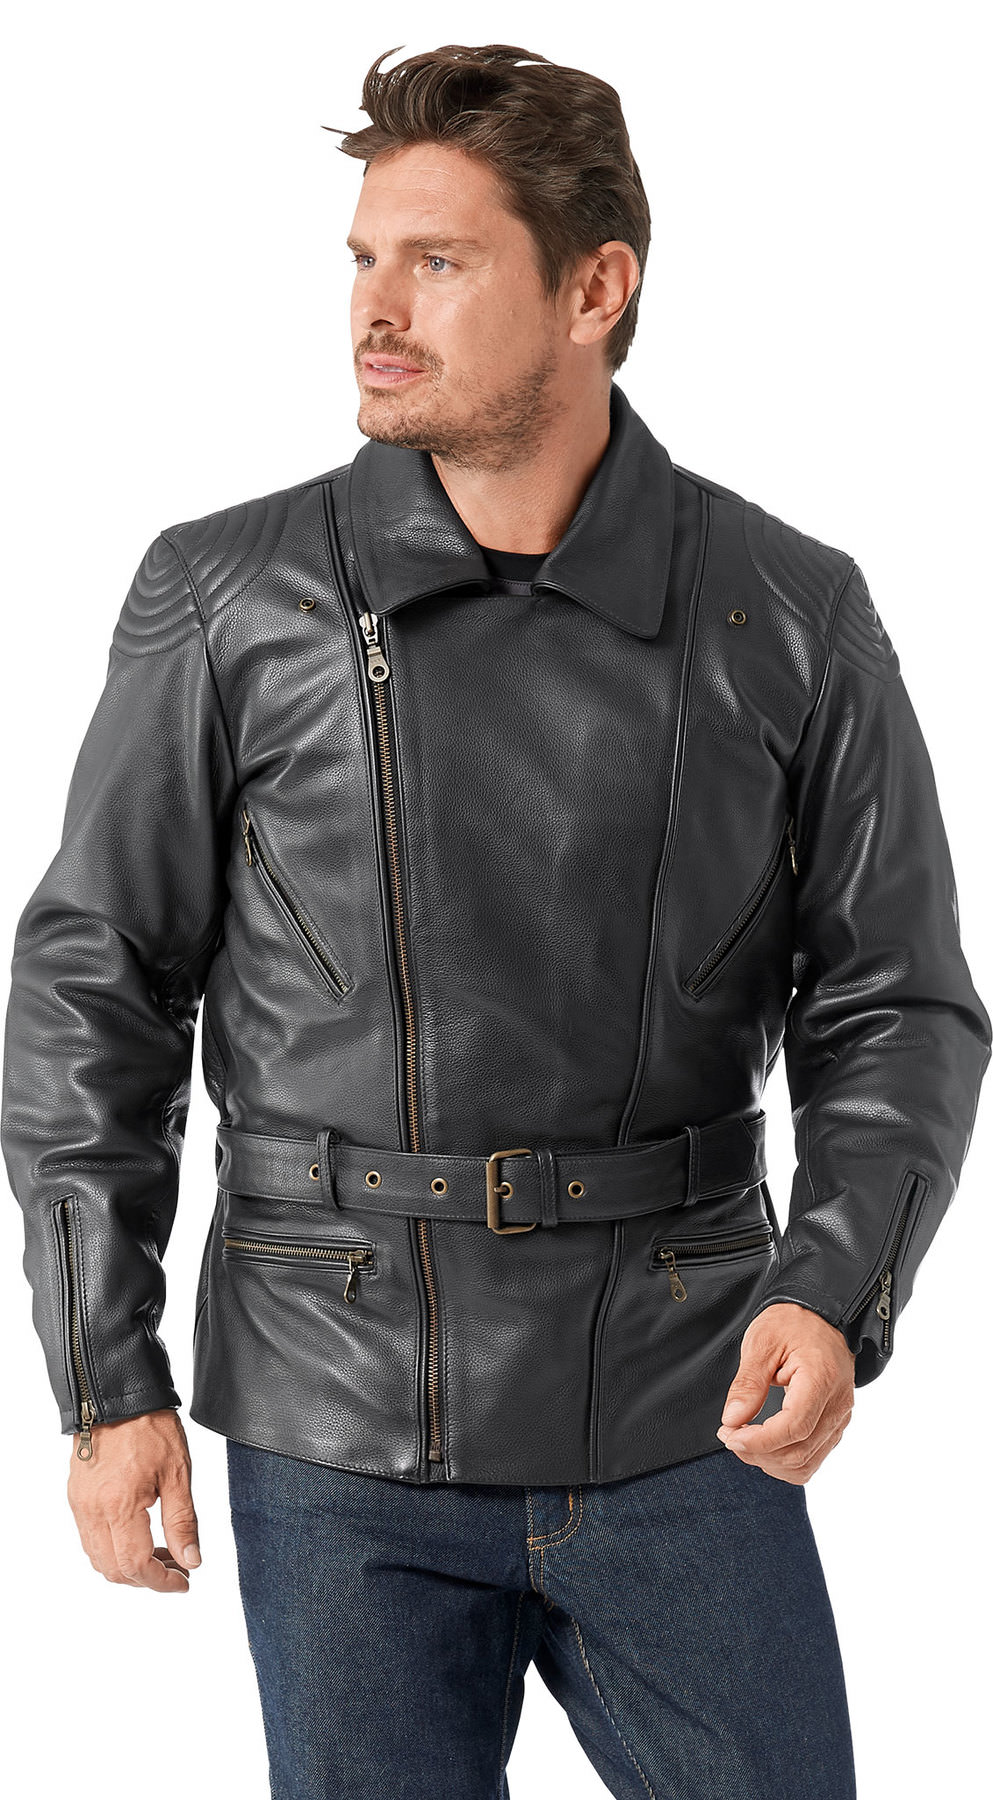 Herren Lederjacke Highway Motorradlederjacke motorbike rela leather jacket fashi 